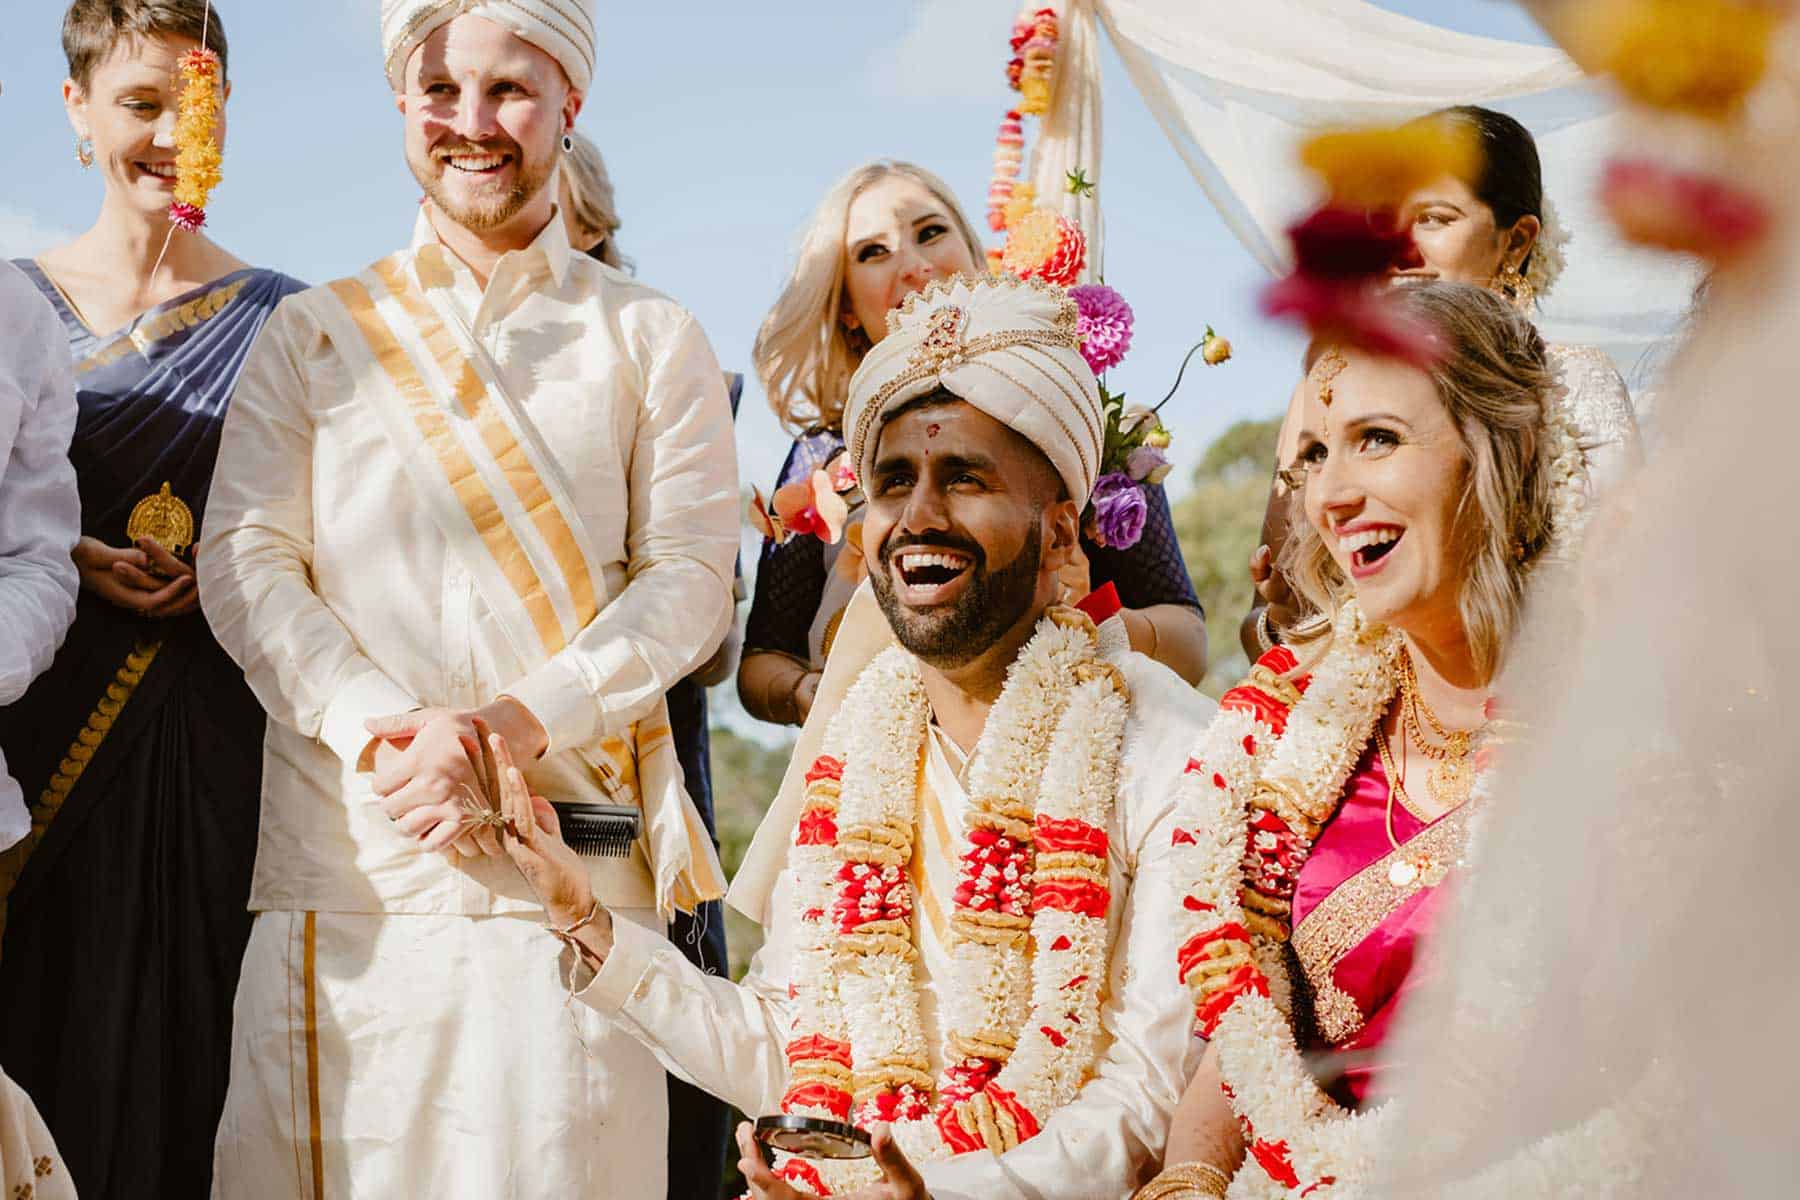 Modern Sri Lankan / Australian wedding inthe Yarra Valley